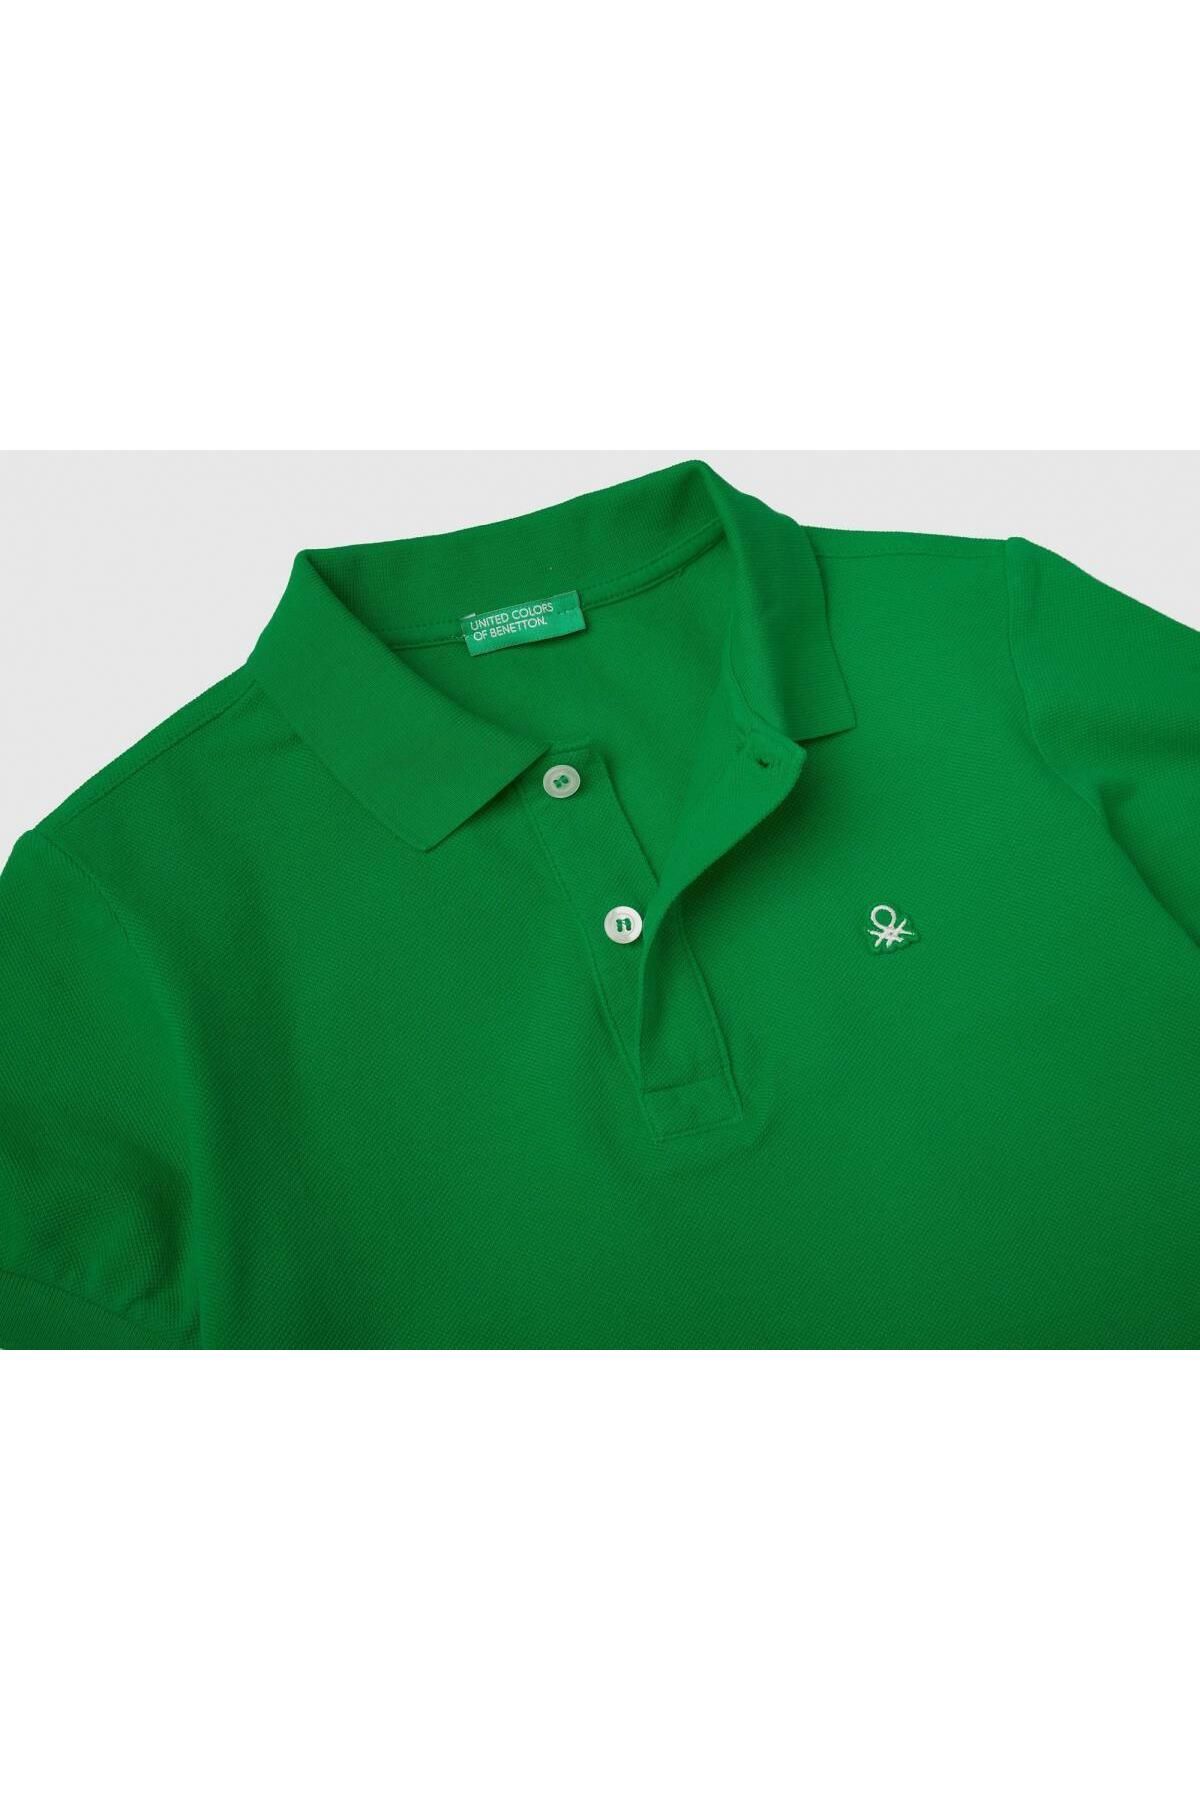 United Colors of Benetton Erkek Çocuk Tshirt 3089c300q